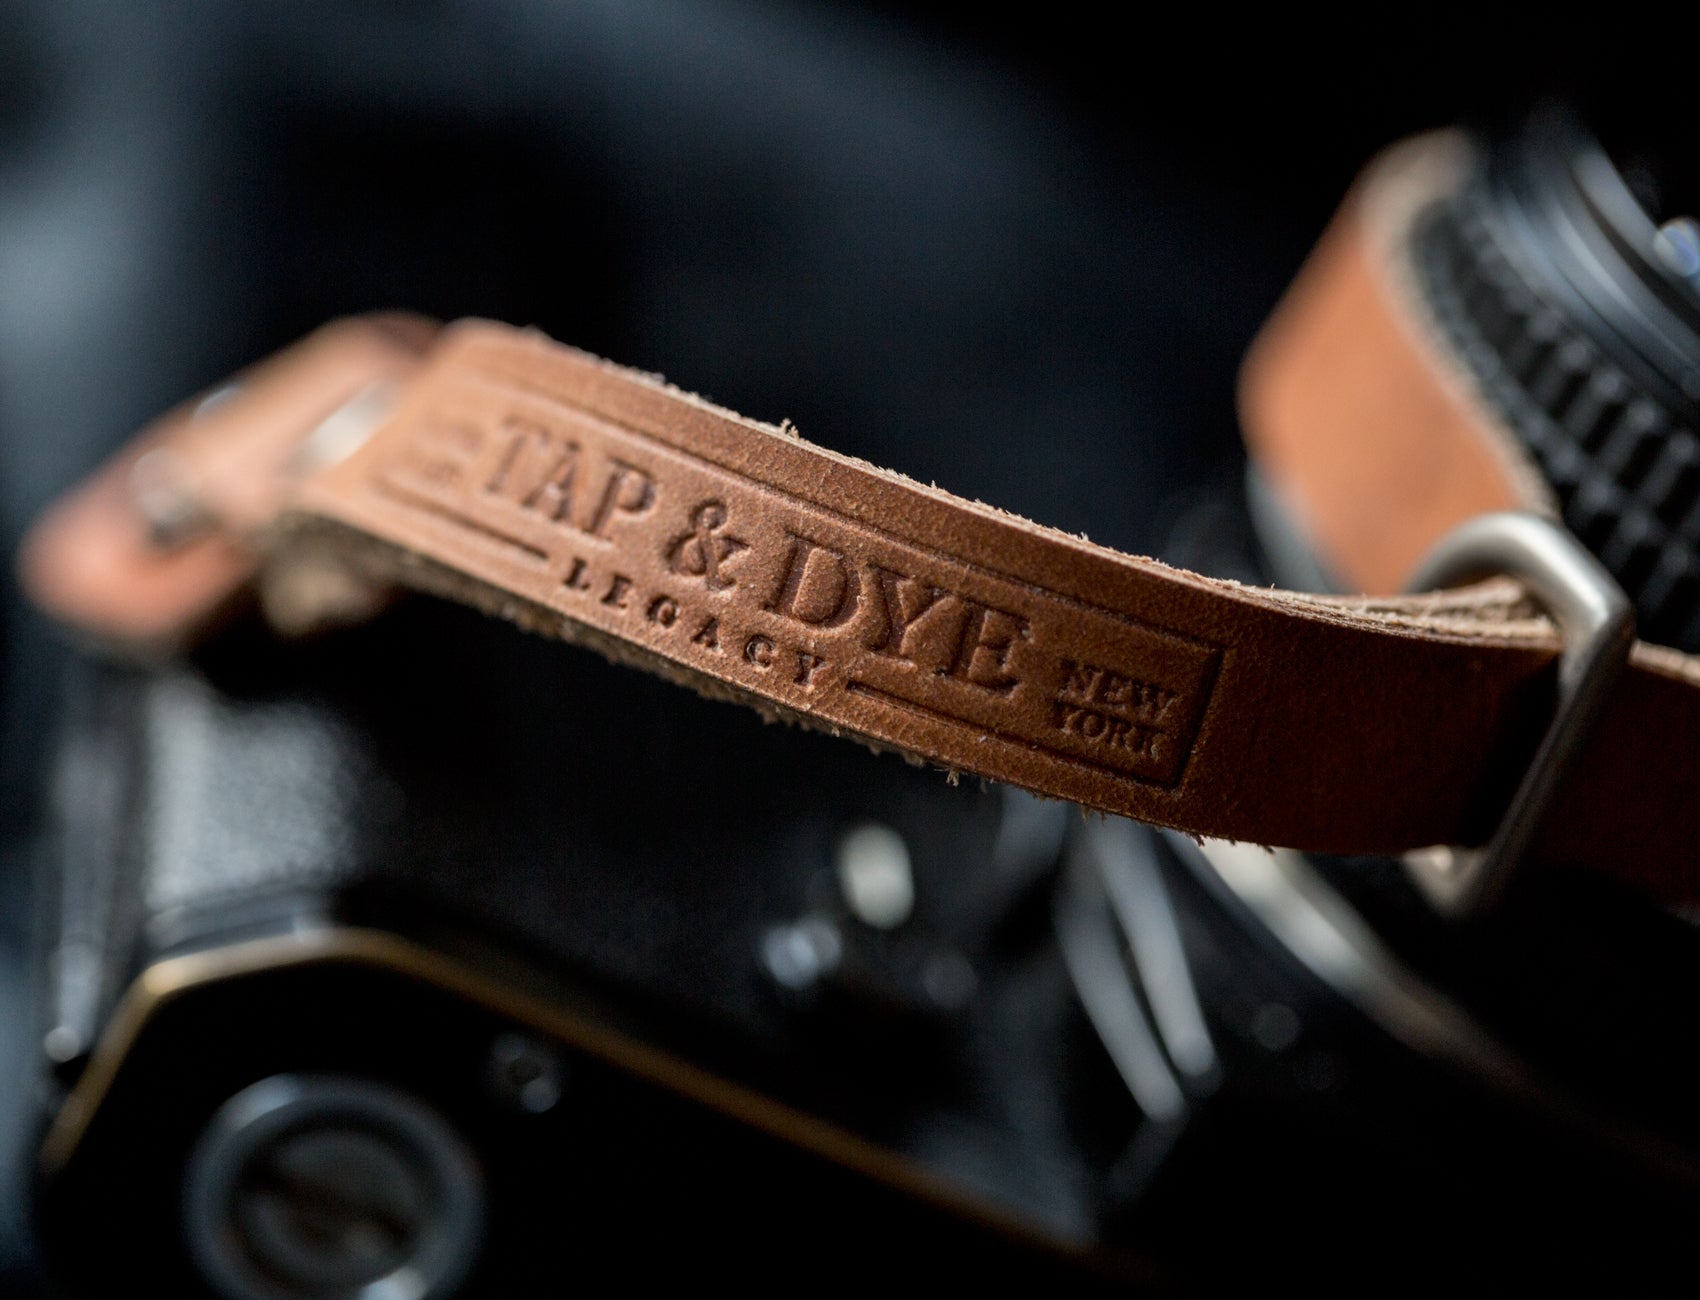 leather camera strap, handmade leather camera straps, camera straps, leather wrist straps